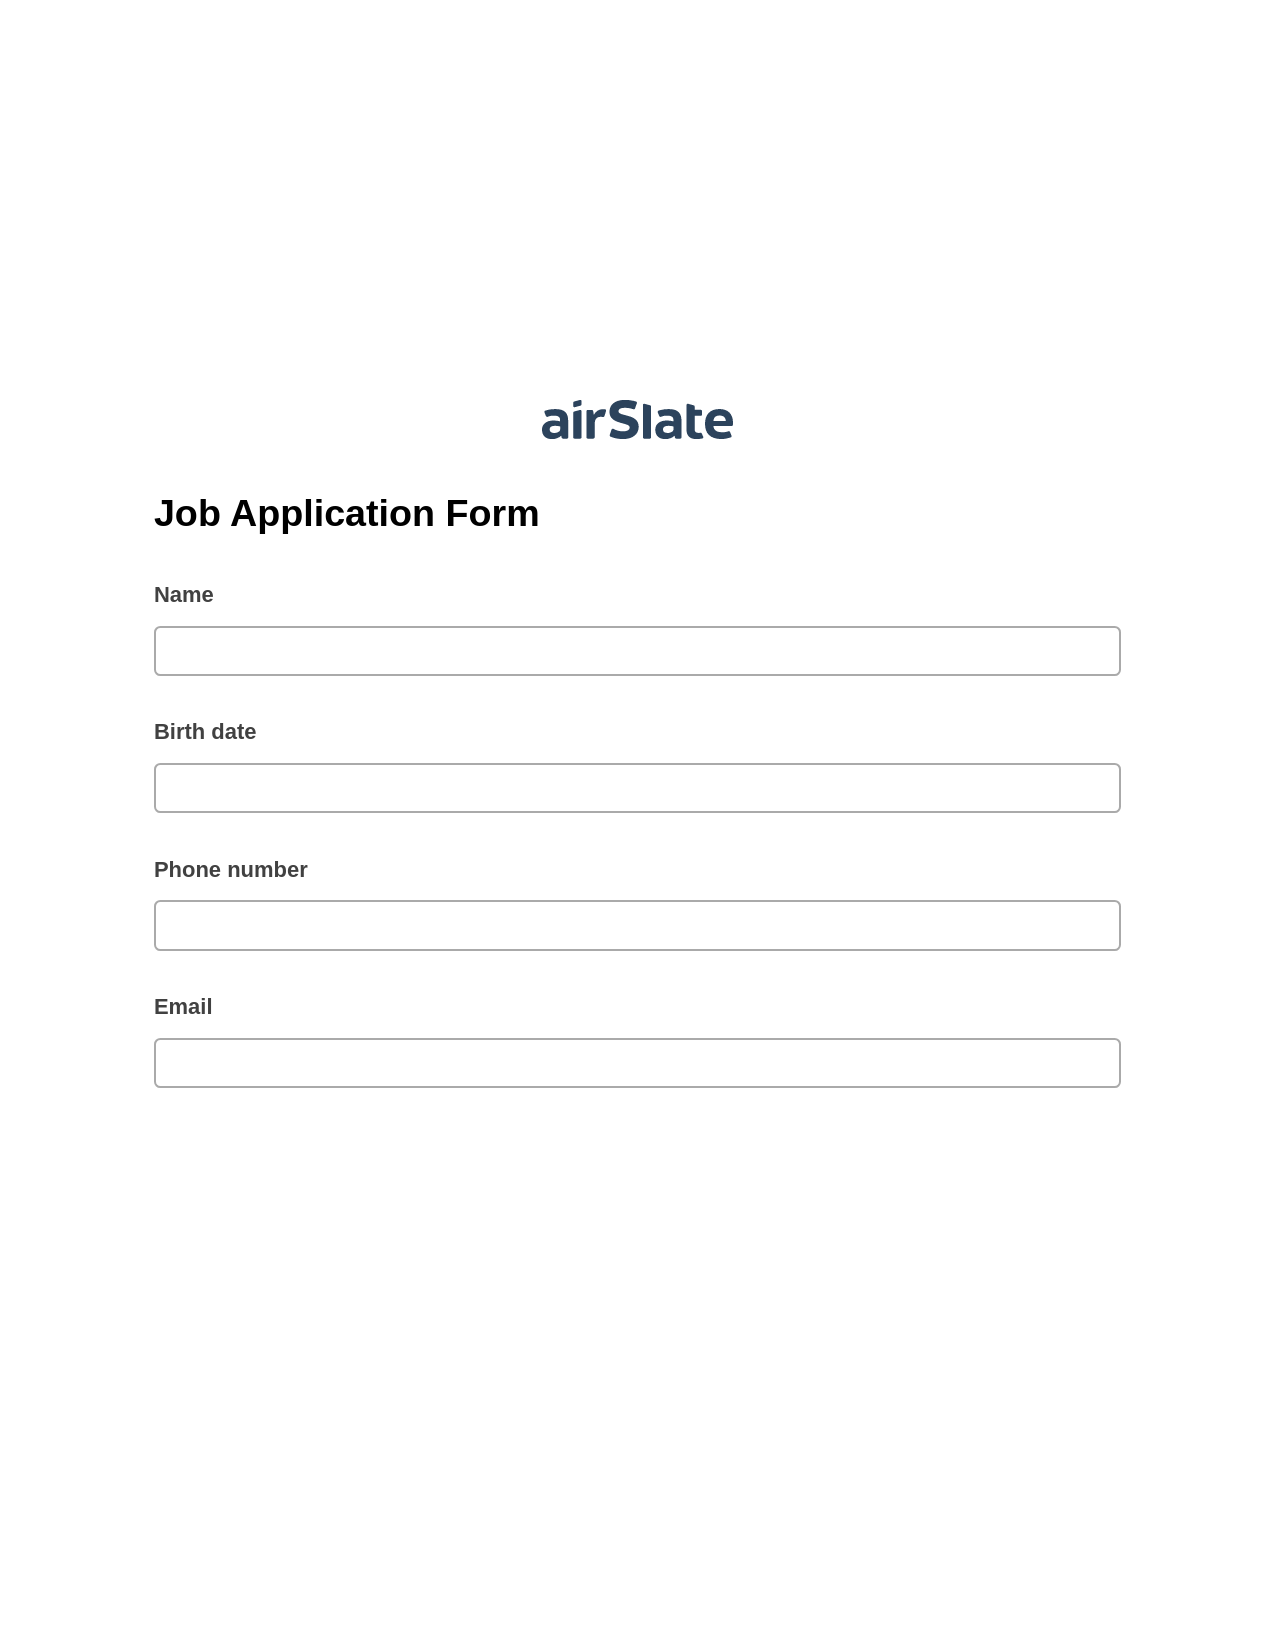 Multirole Job Application Form Pre-fill from Google Sheet Dropdown Options Bot, Revoke Access Bot, Box Bot